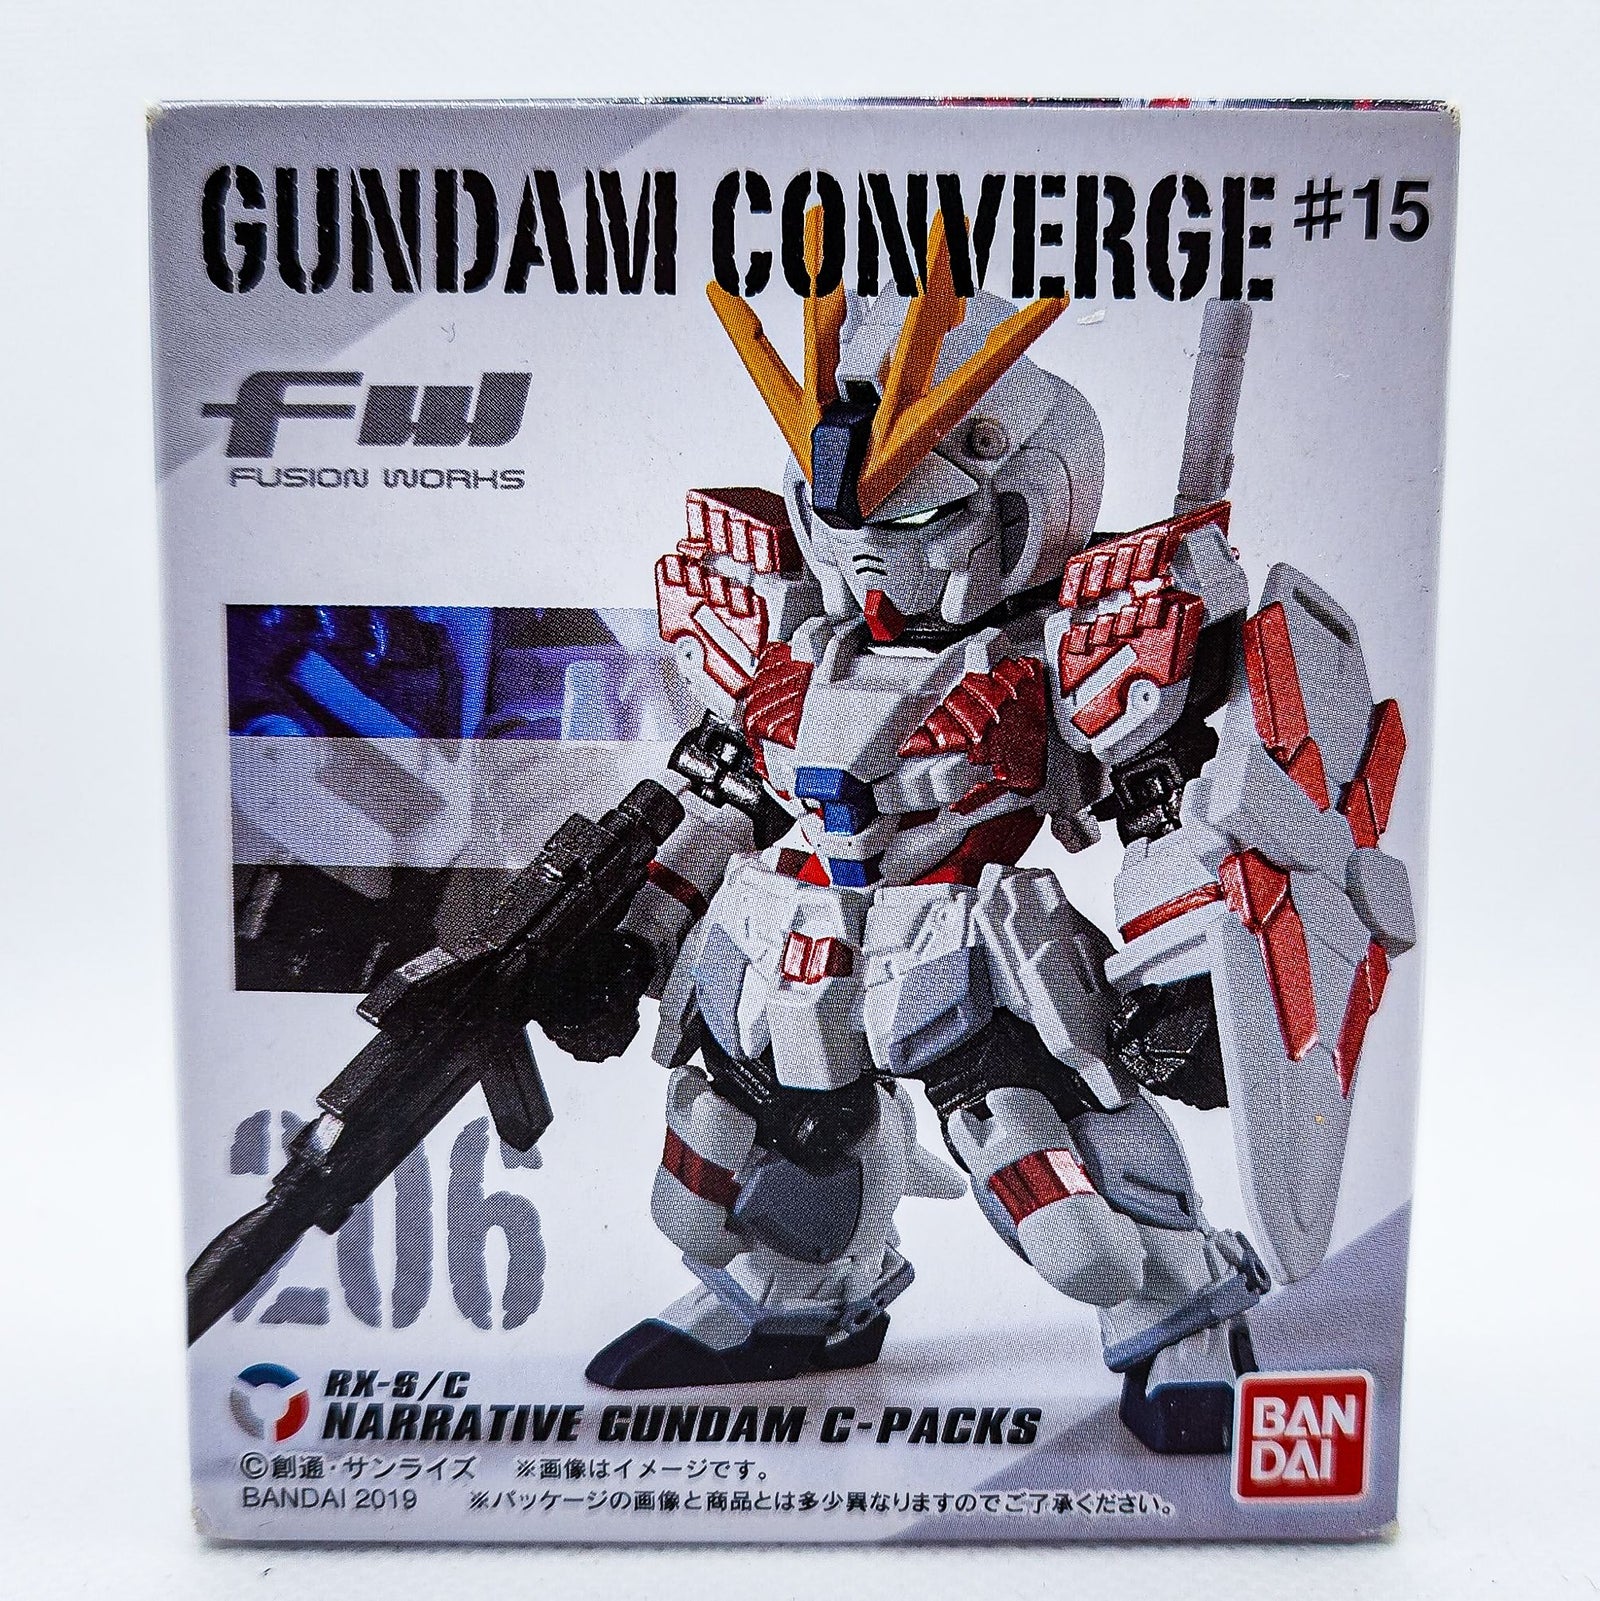 Gundam Converge #206 Narrative Gundam C-Packs by Bandai - 1